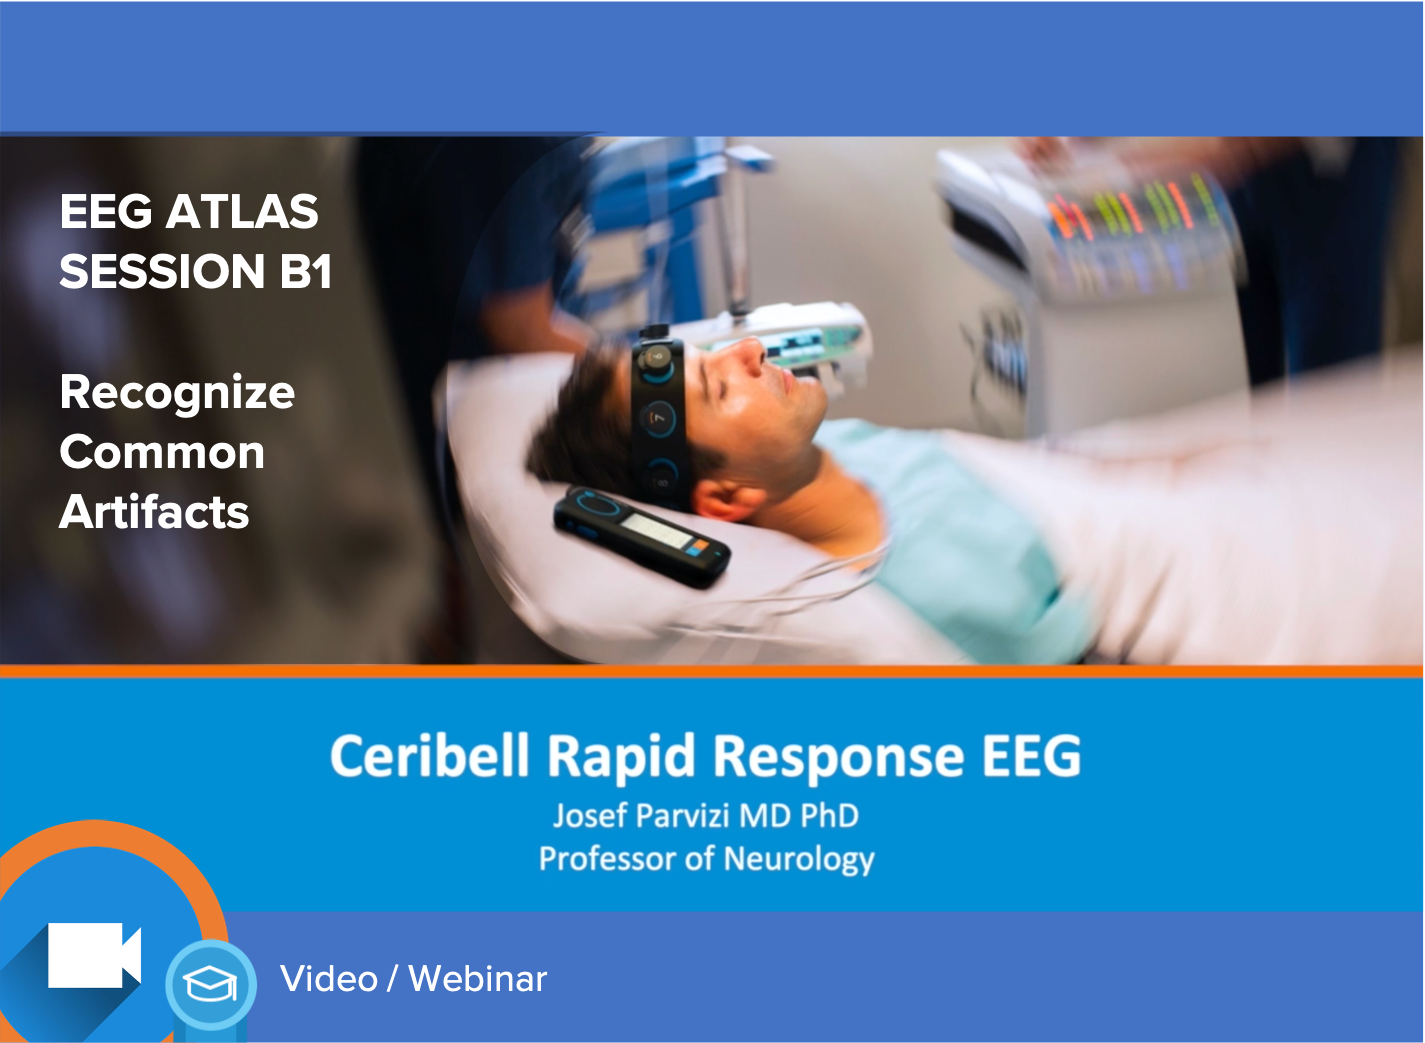 EEG Atlas B1: Recognize Common Artifacts Seen on EEG Using The Ceribell Rapid Response System